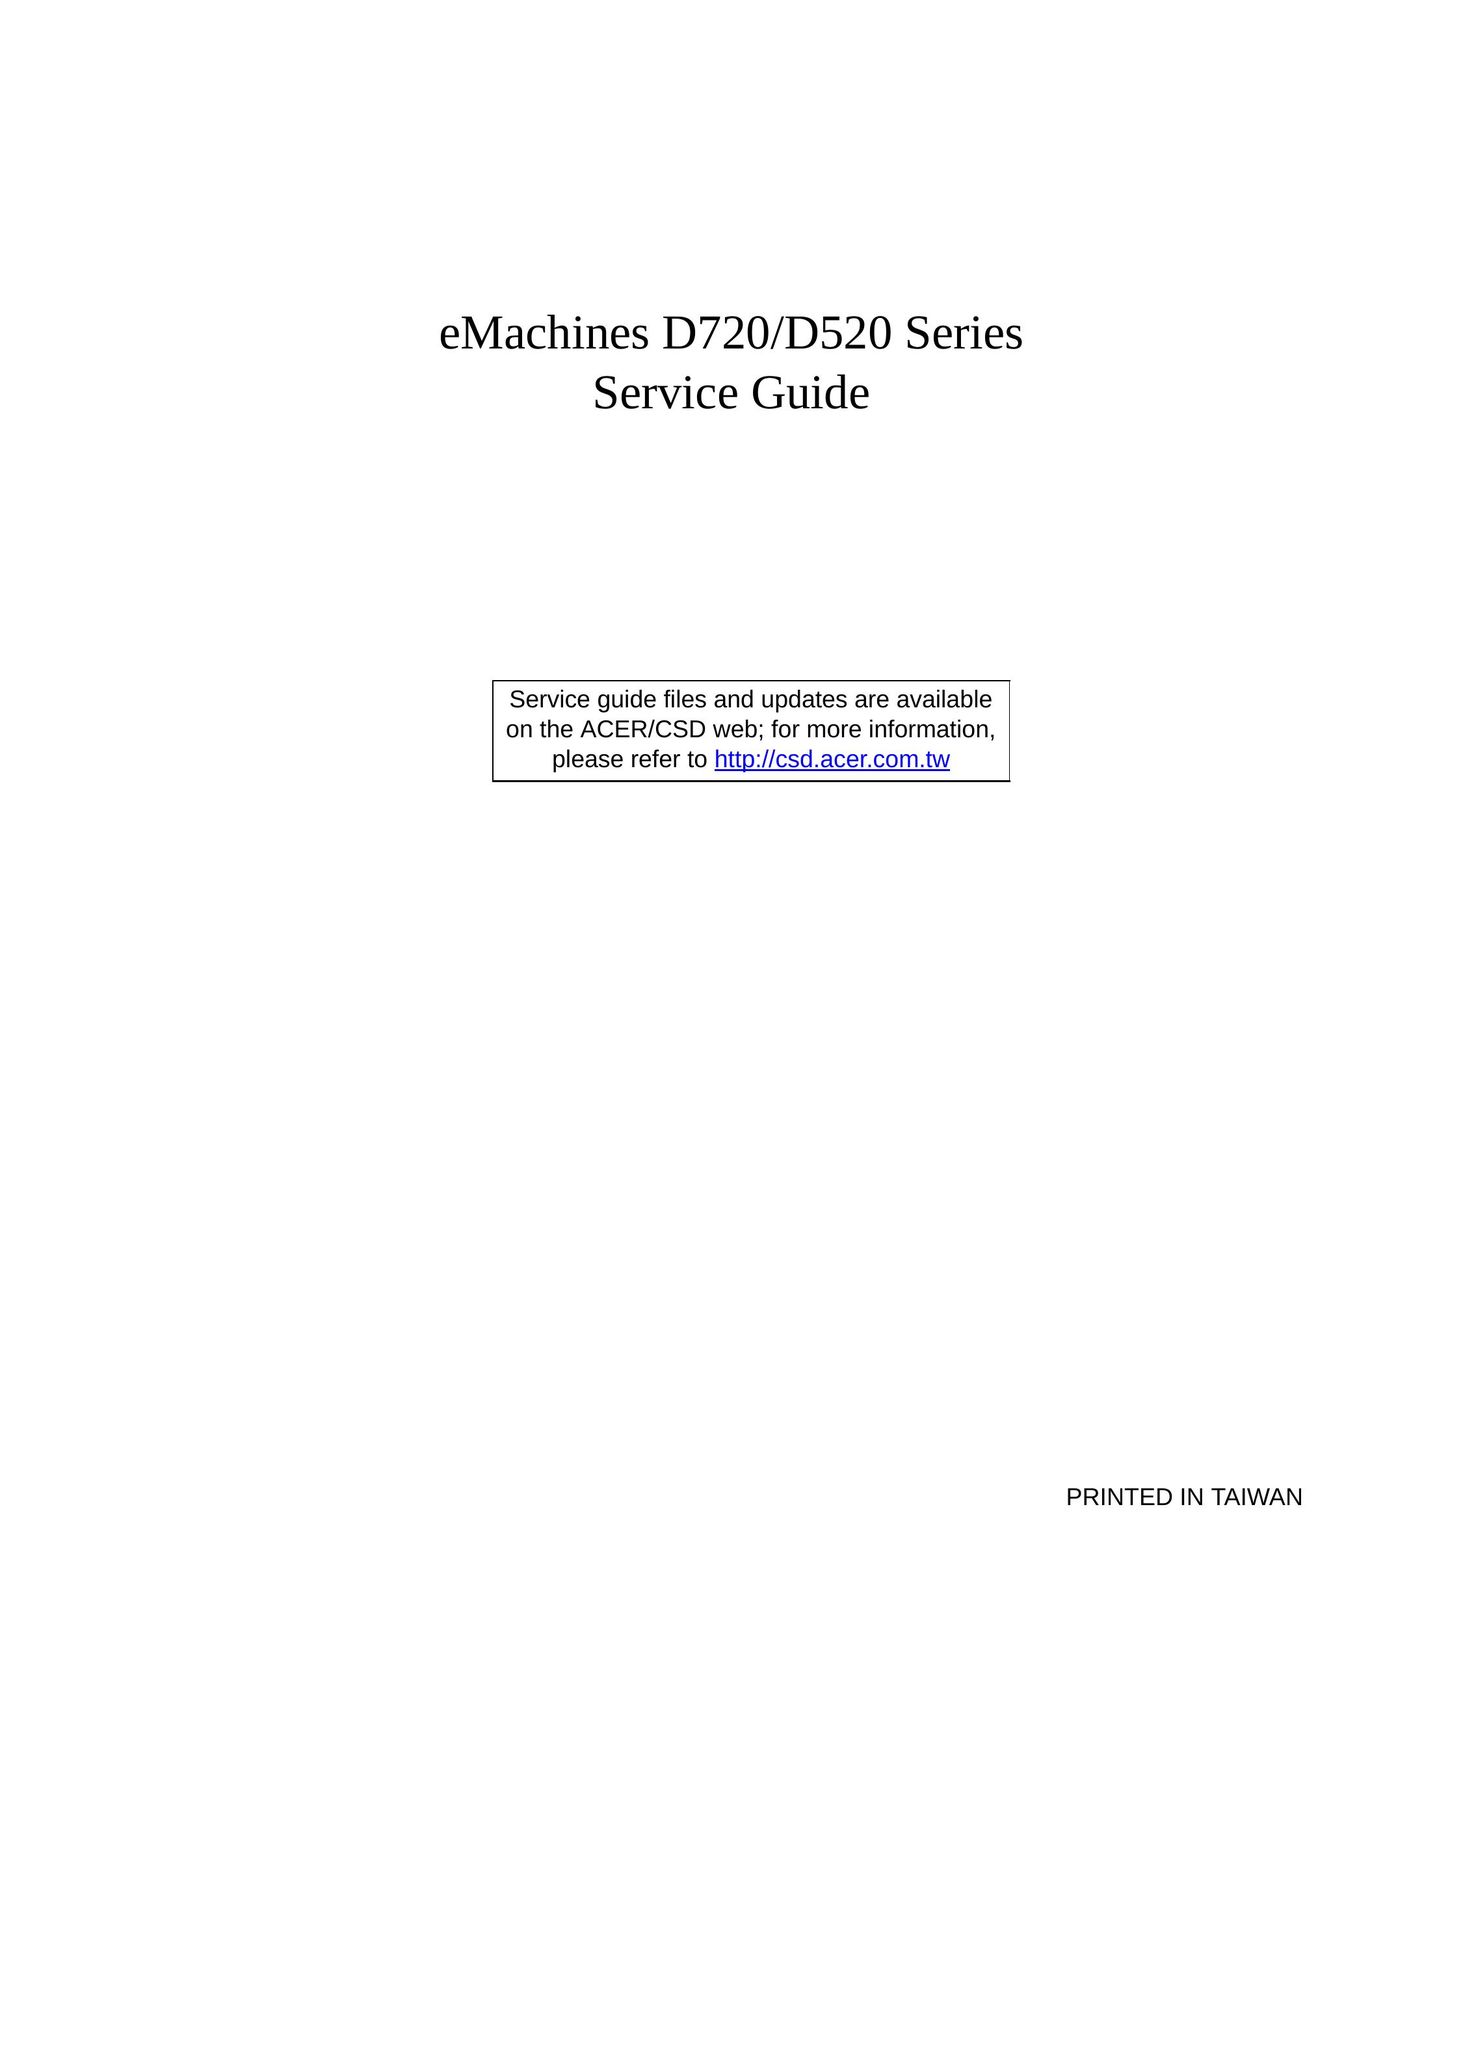 eMachines D720 Laptop User Manual